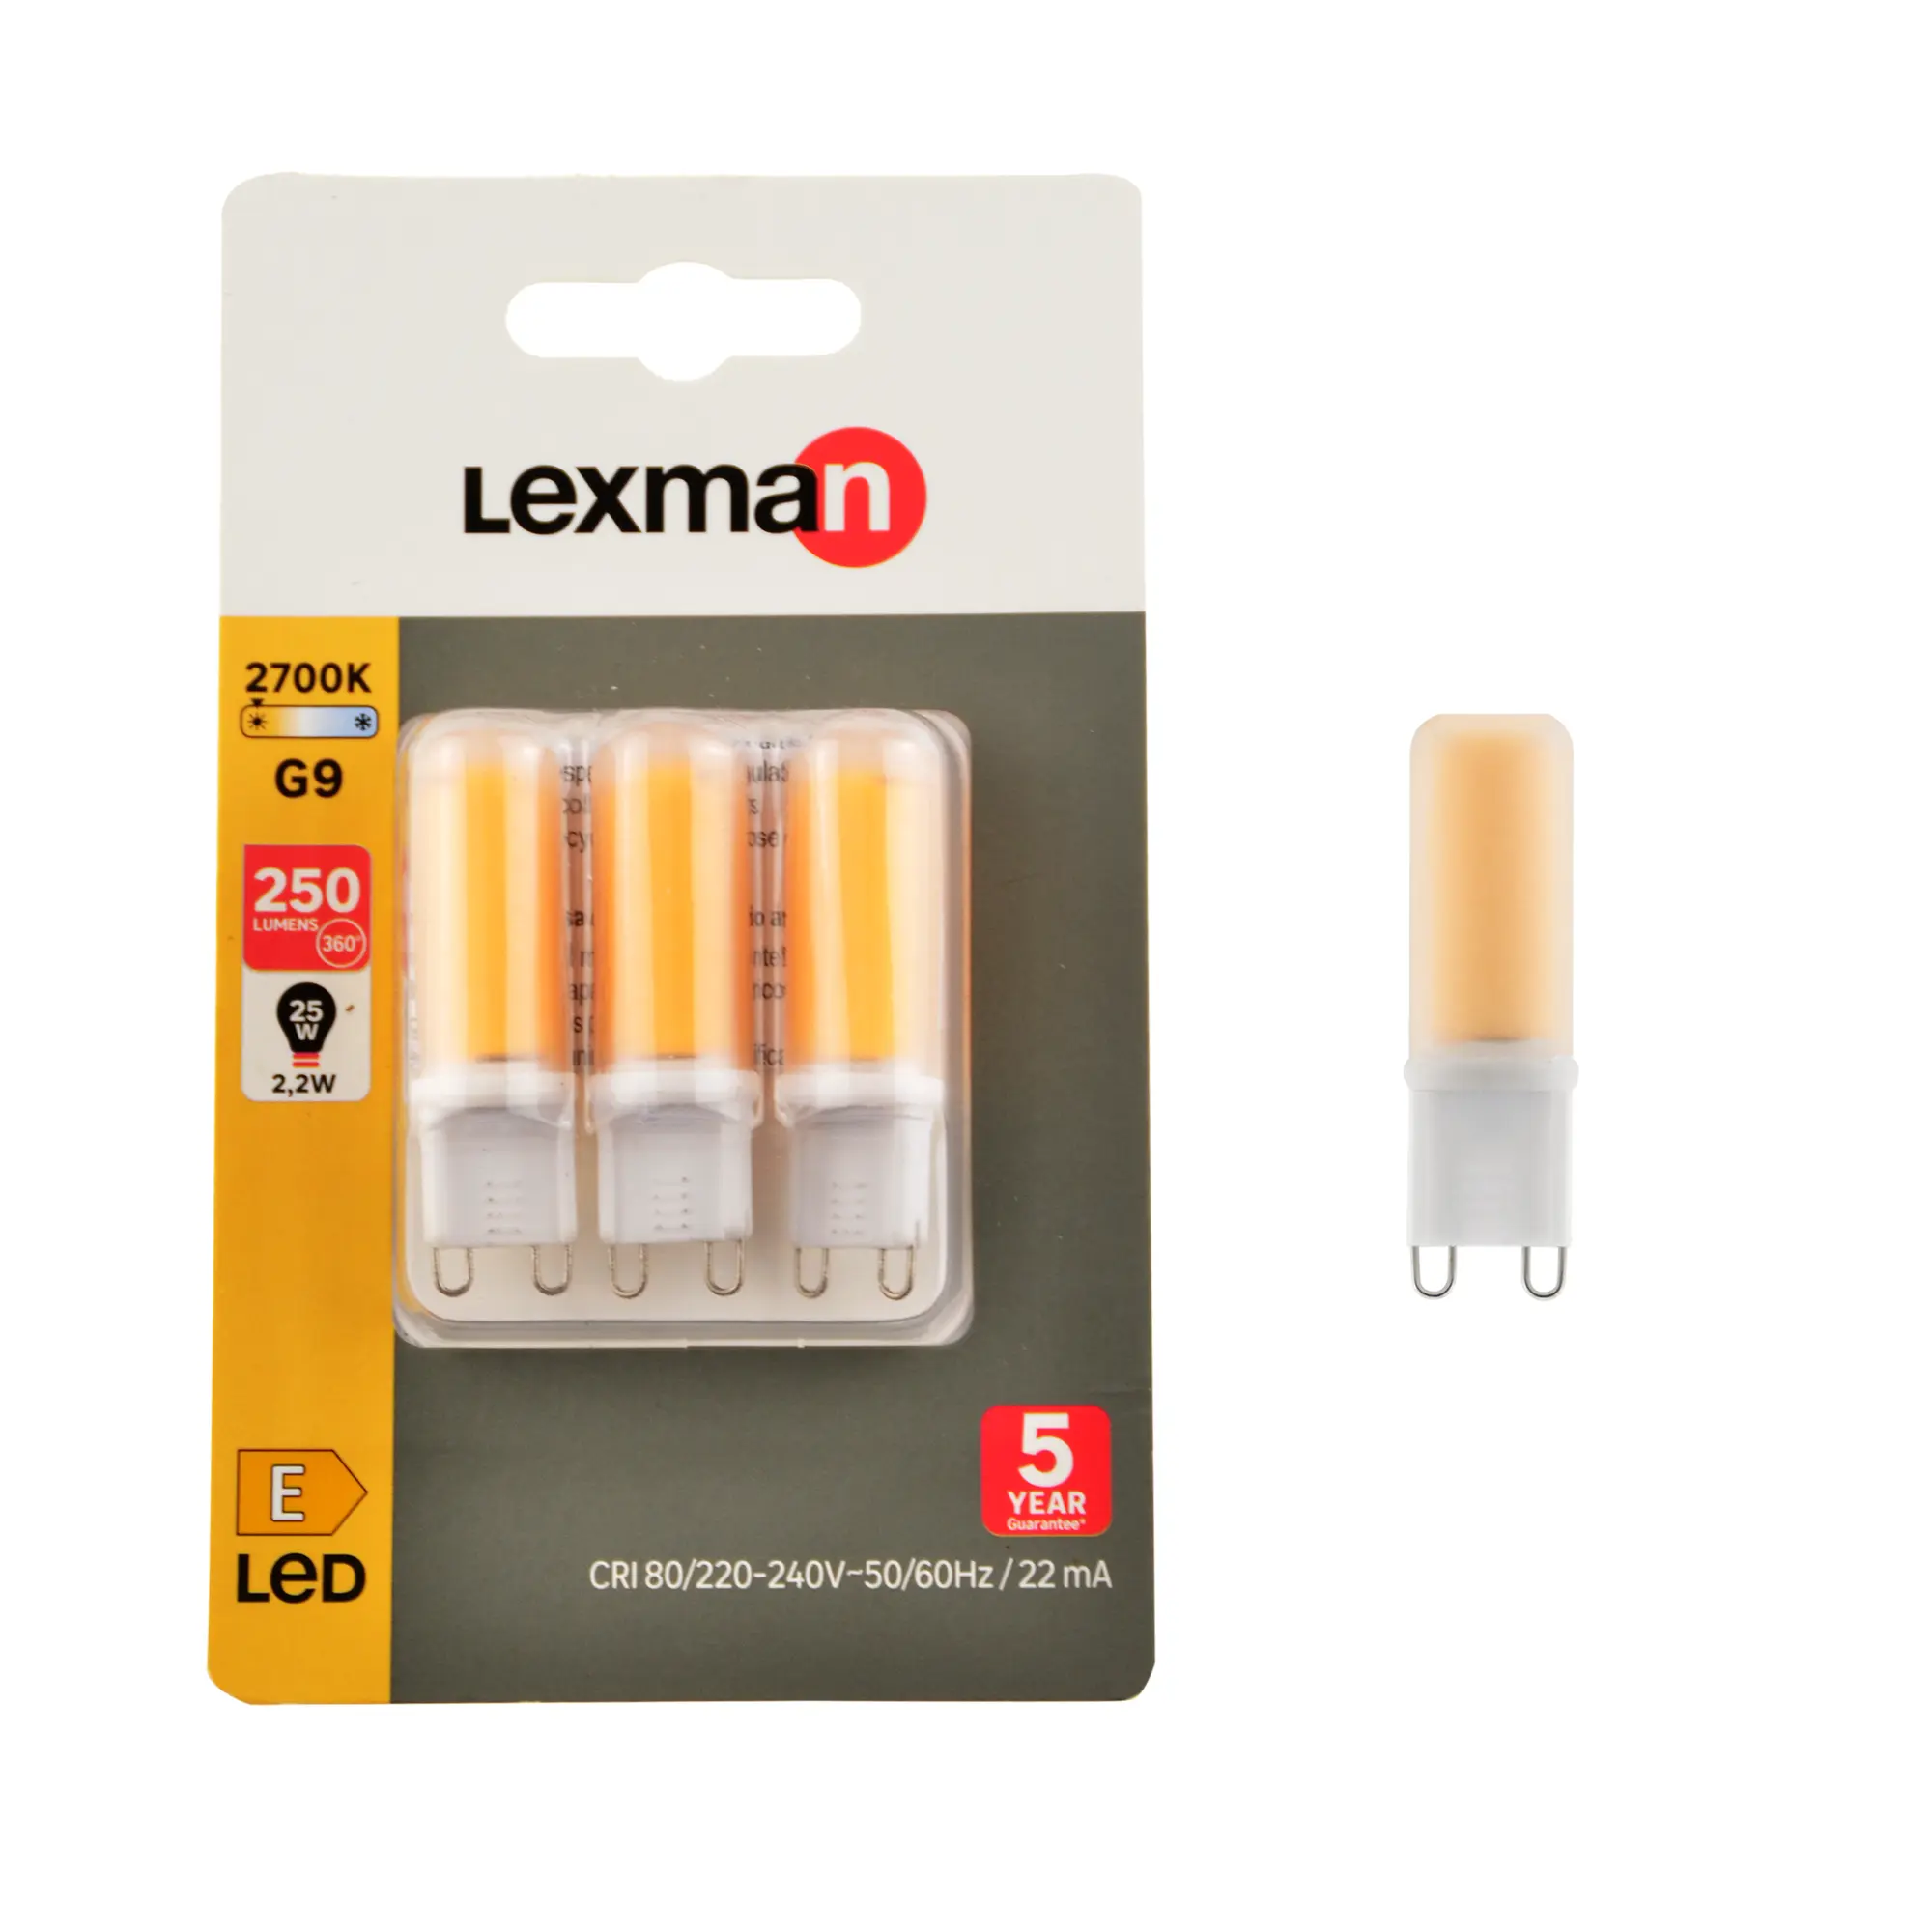 Pack de 3 bombillas led lexman filamento globo casquillo g9 de 2700 k